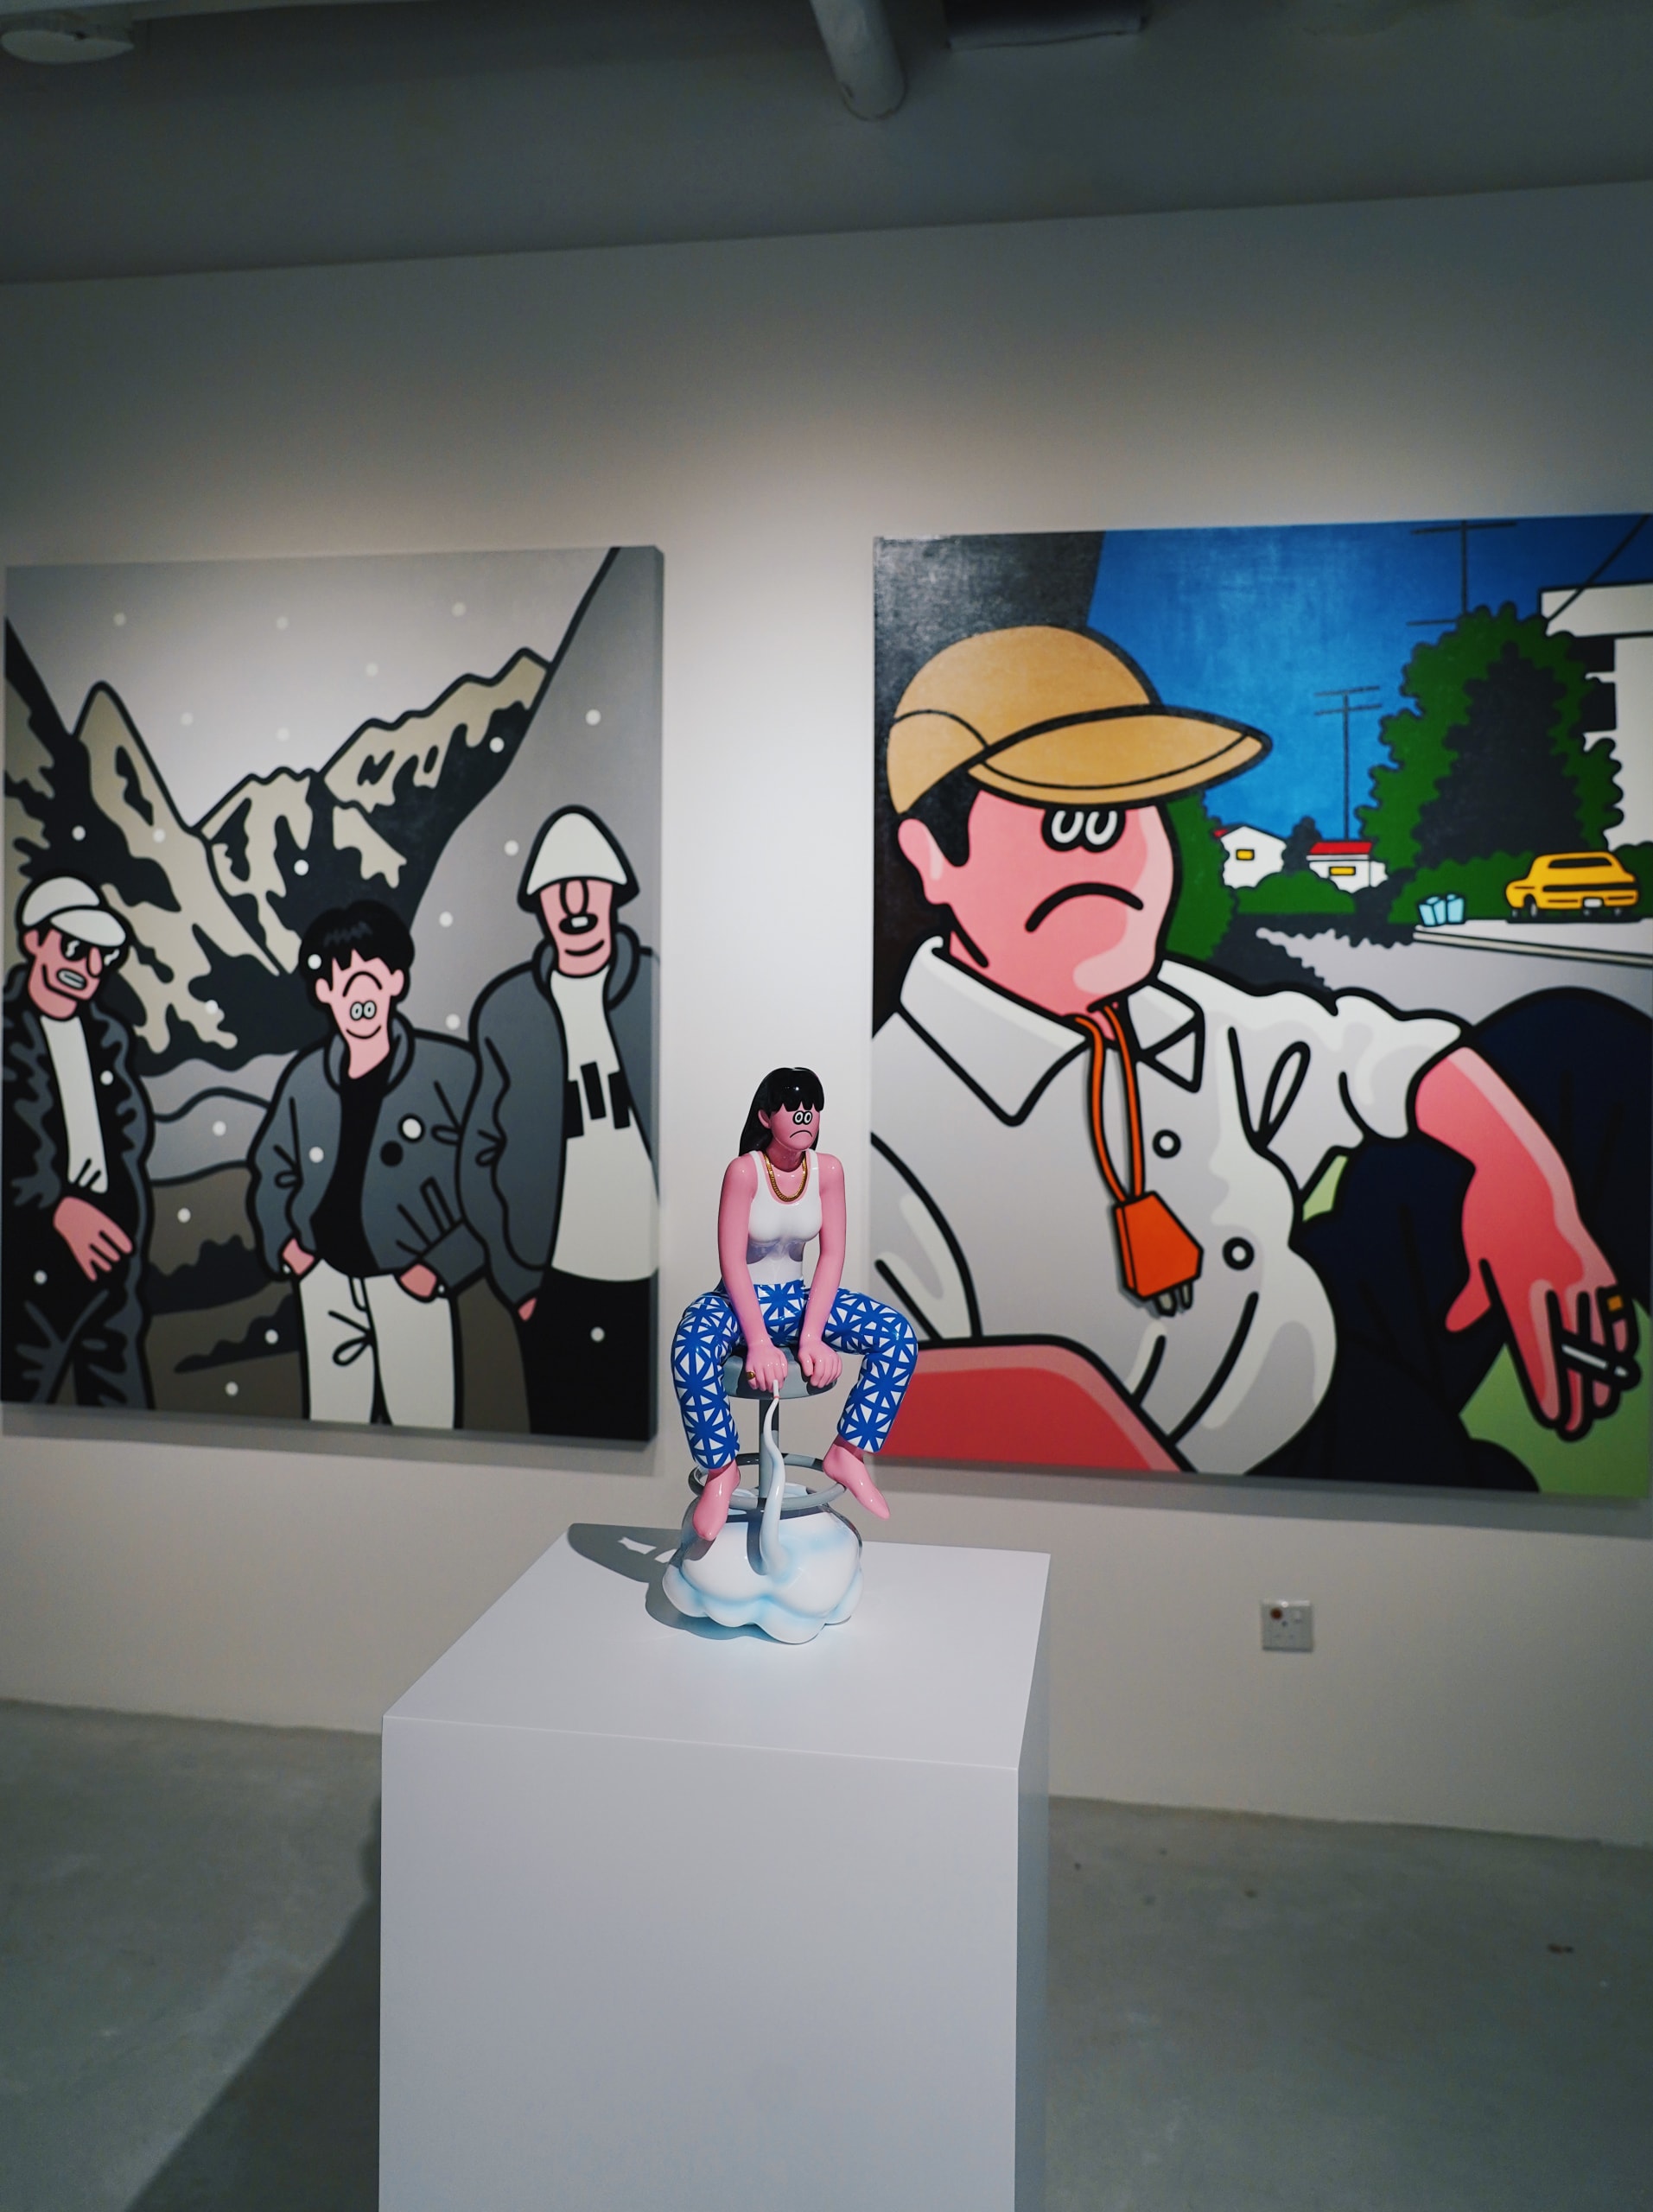 AllRightsReserved 主辦日本藝術家 face oka 首次海外個展《STORYBOARD》正式登陸香港